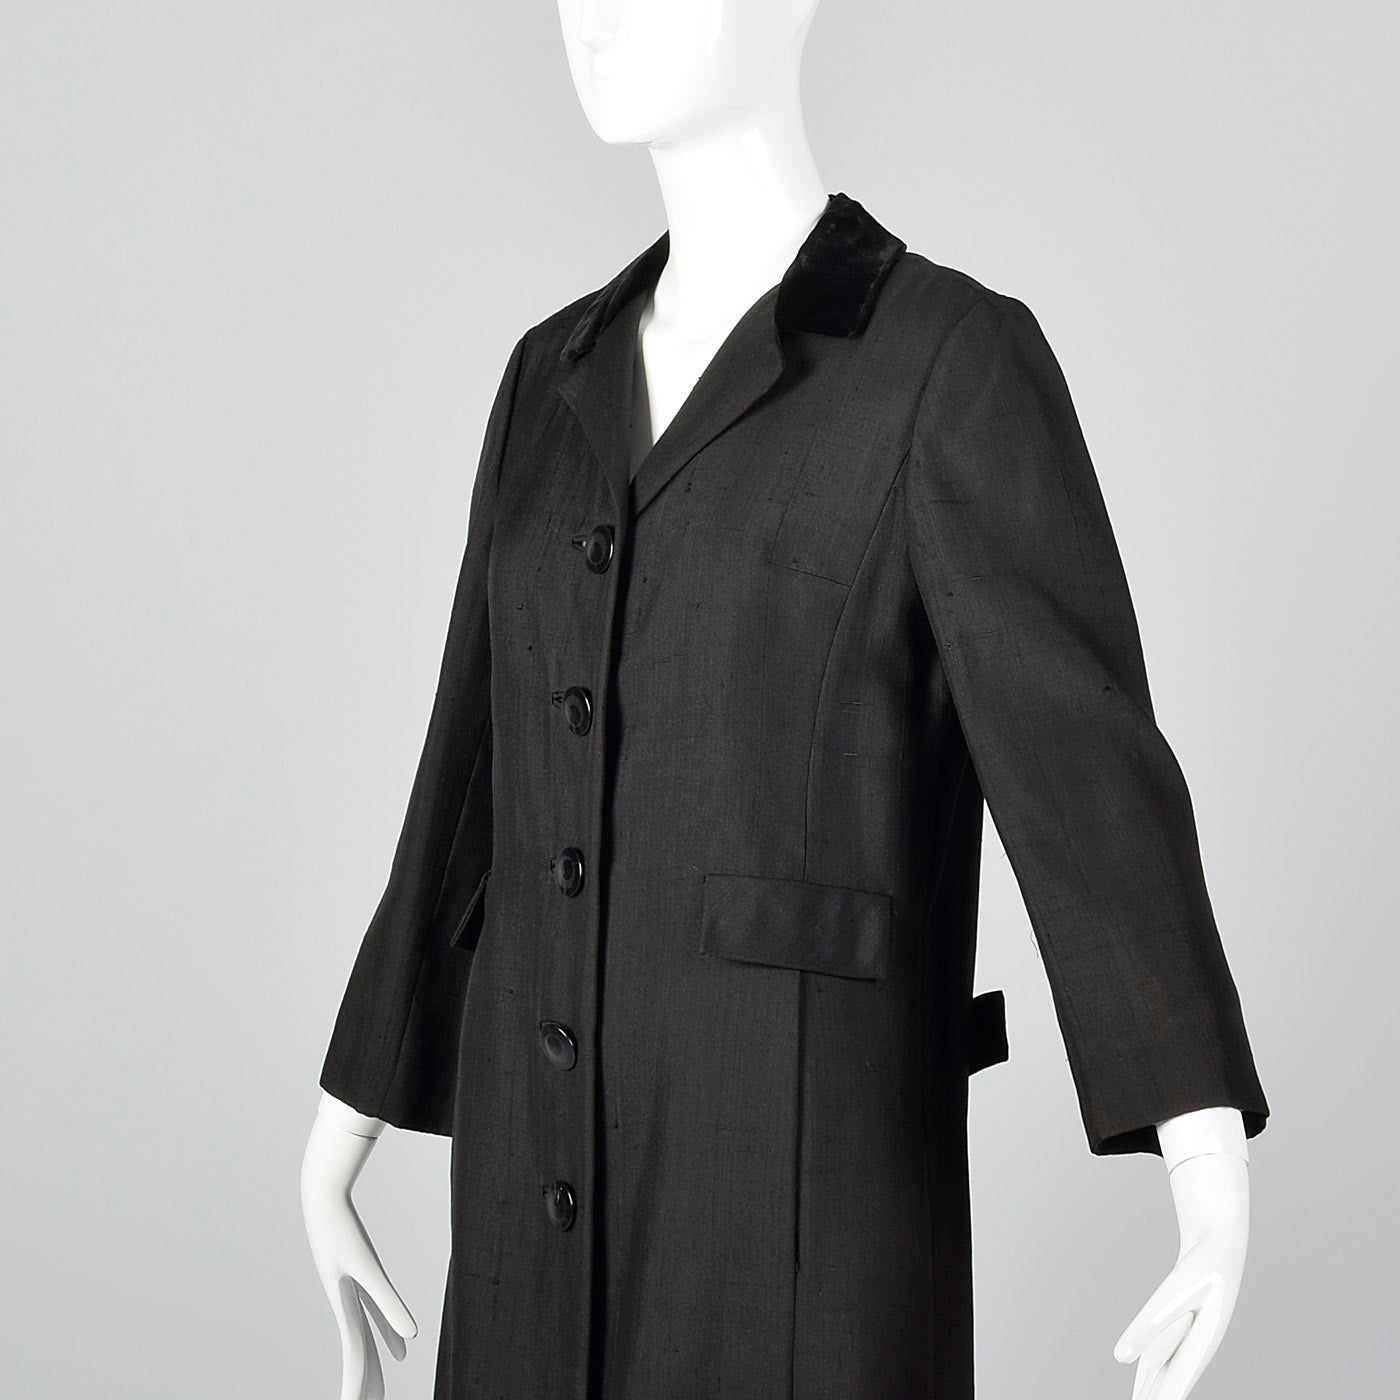 1960s Black Top Coat Style Jacket